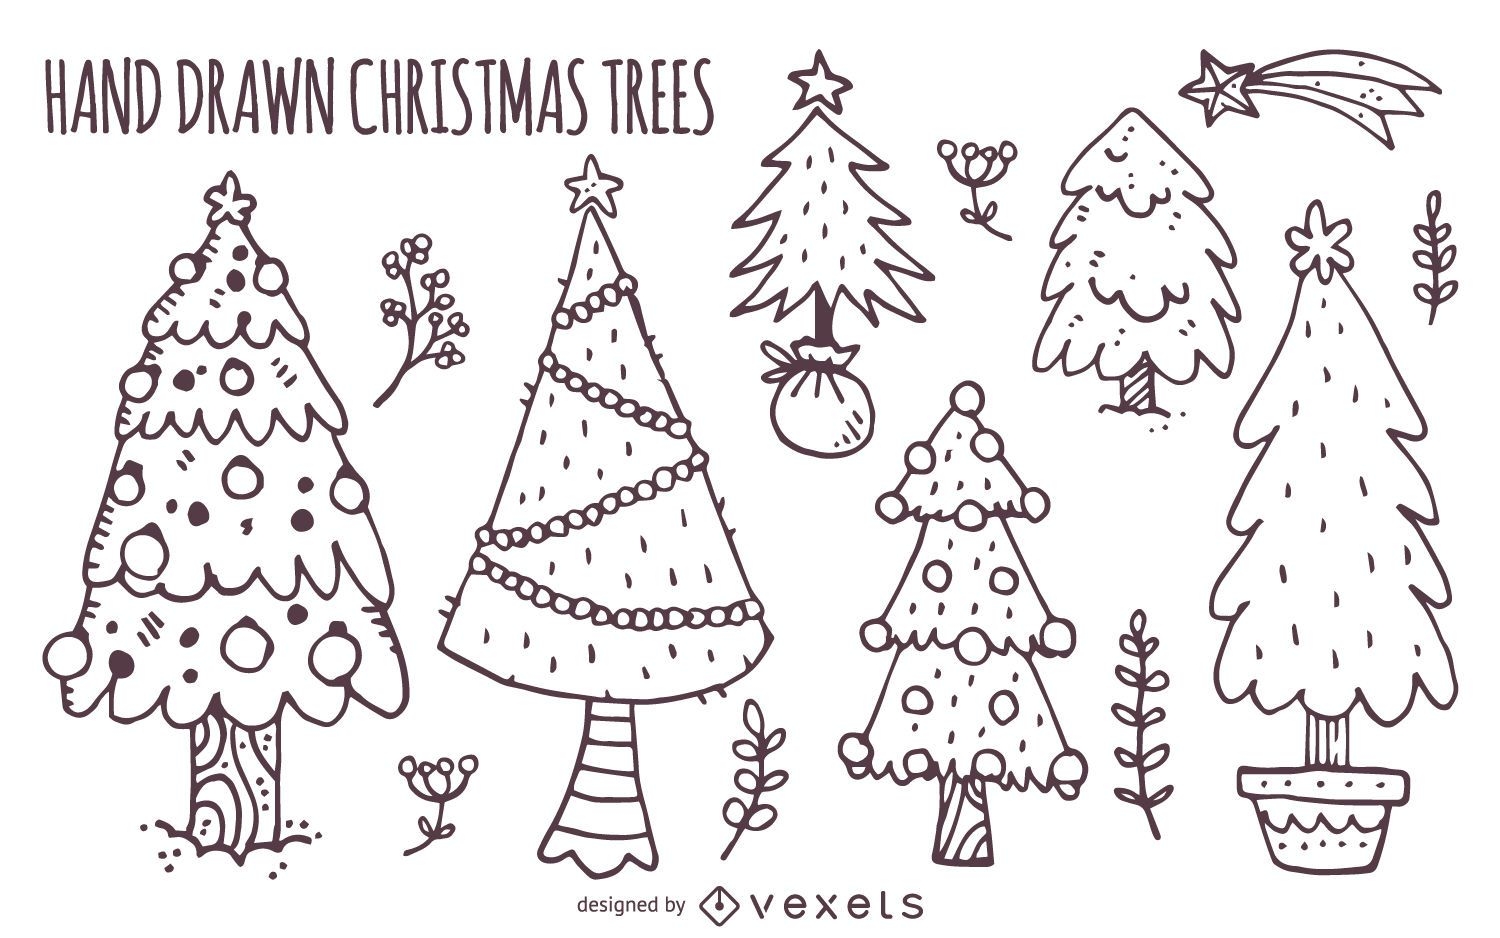 Hand drawn Christmas trees set - Vector download